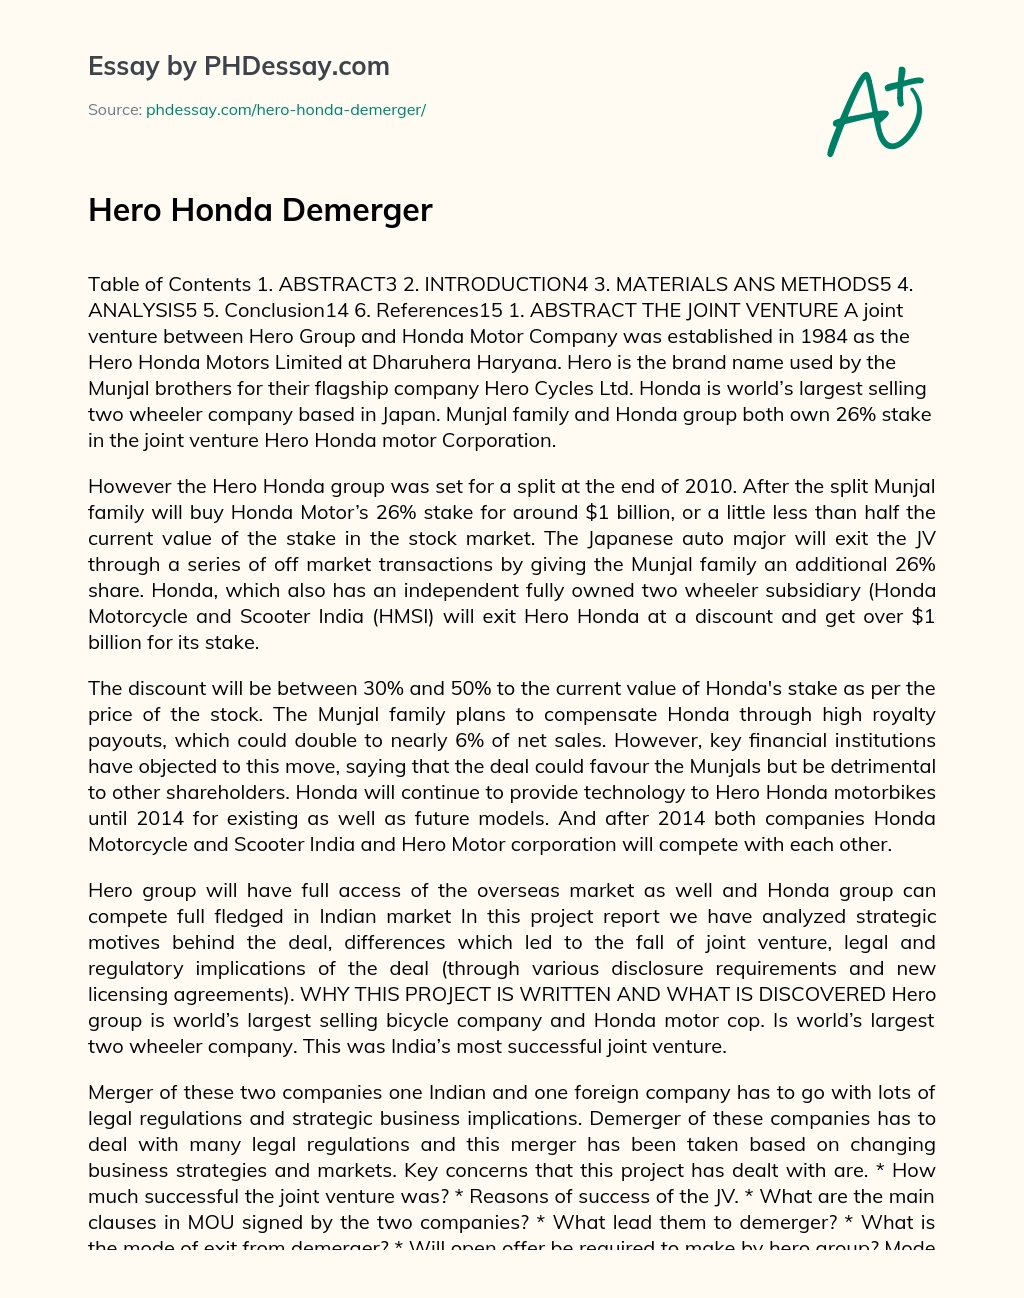 Hero Honda Demerger essay